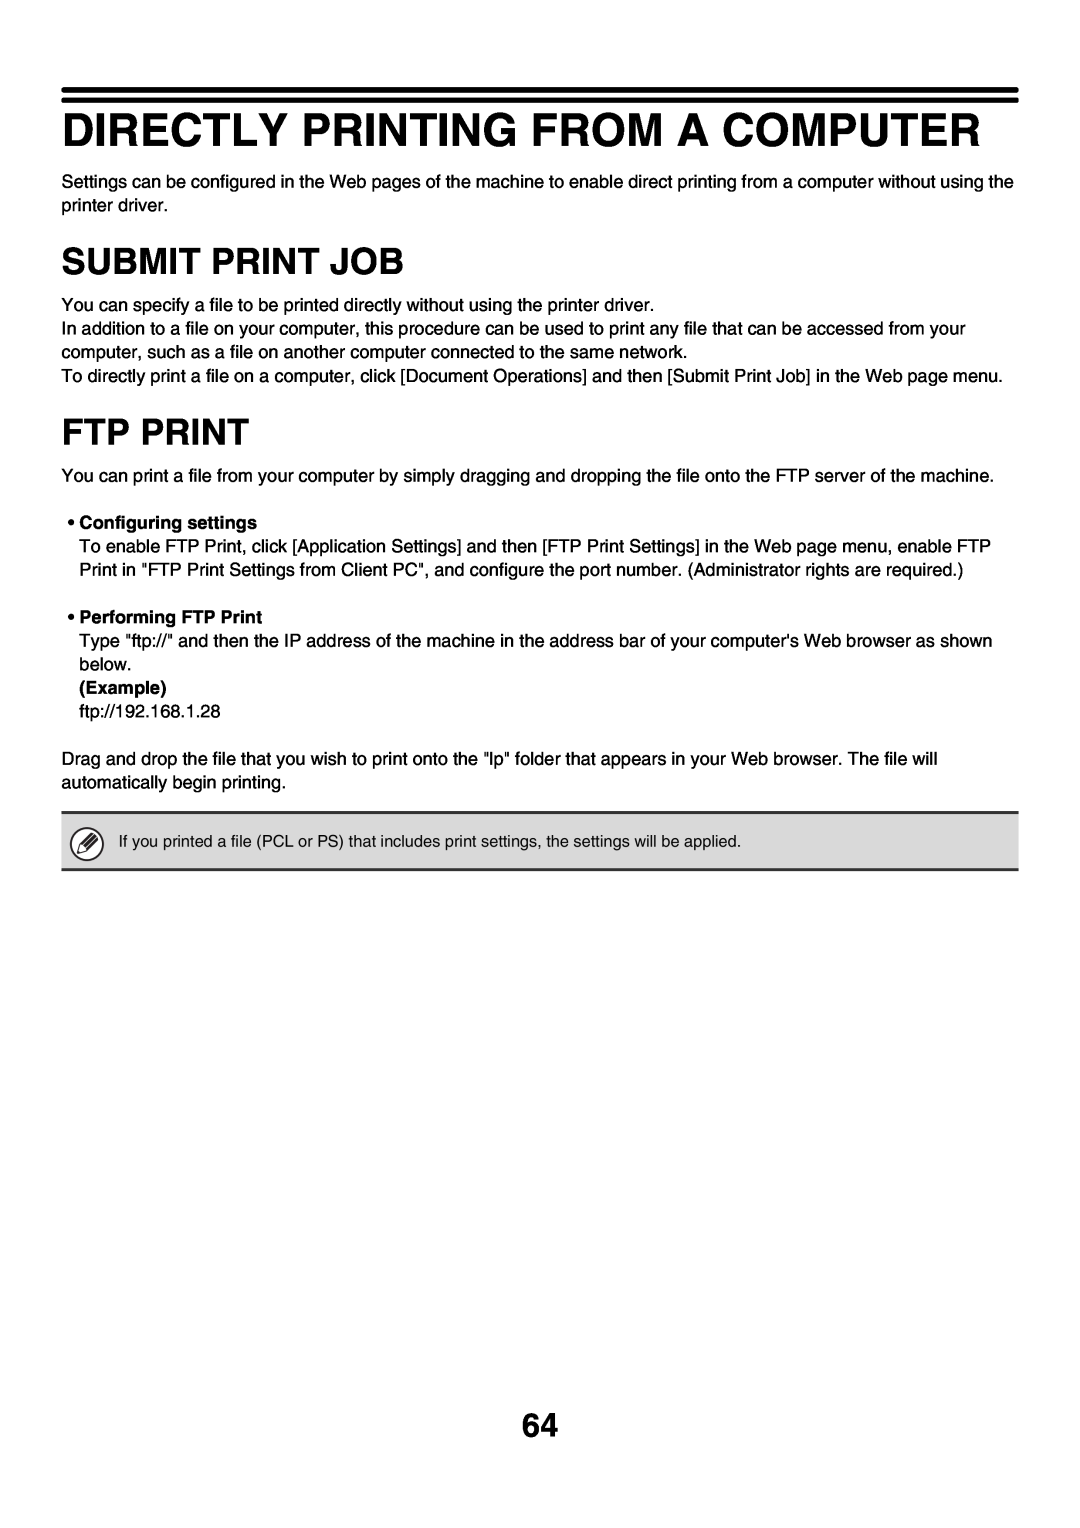 Sharp MX-7000N, MX-6200N, MX-5500N manual Directly Printing From A Computer, Submit Print Job, Ftp Print 